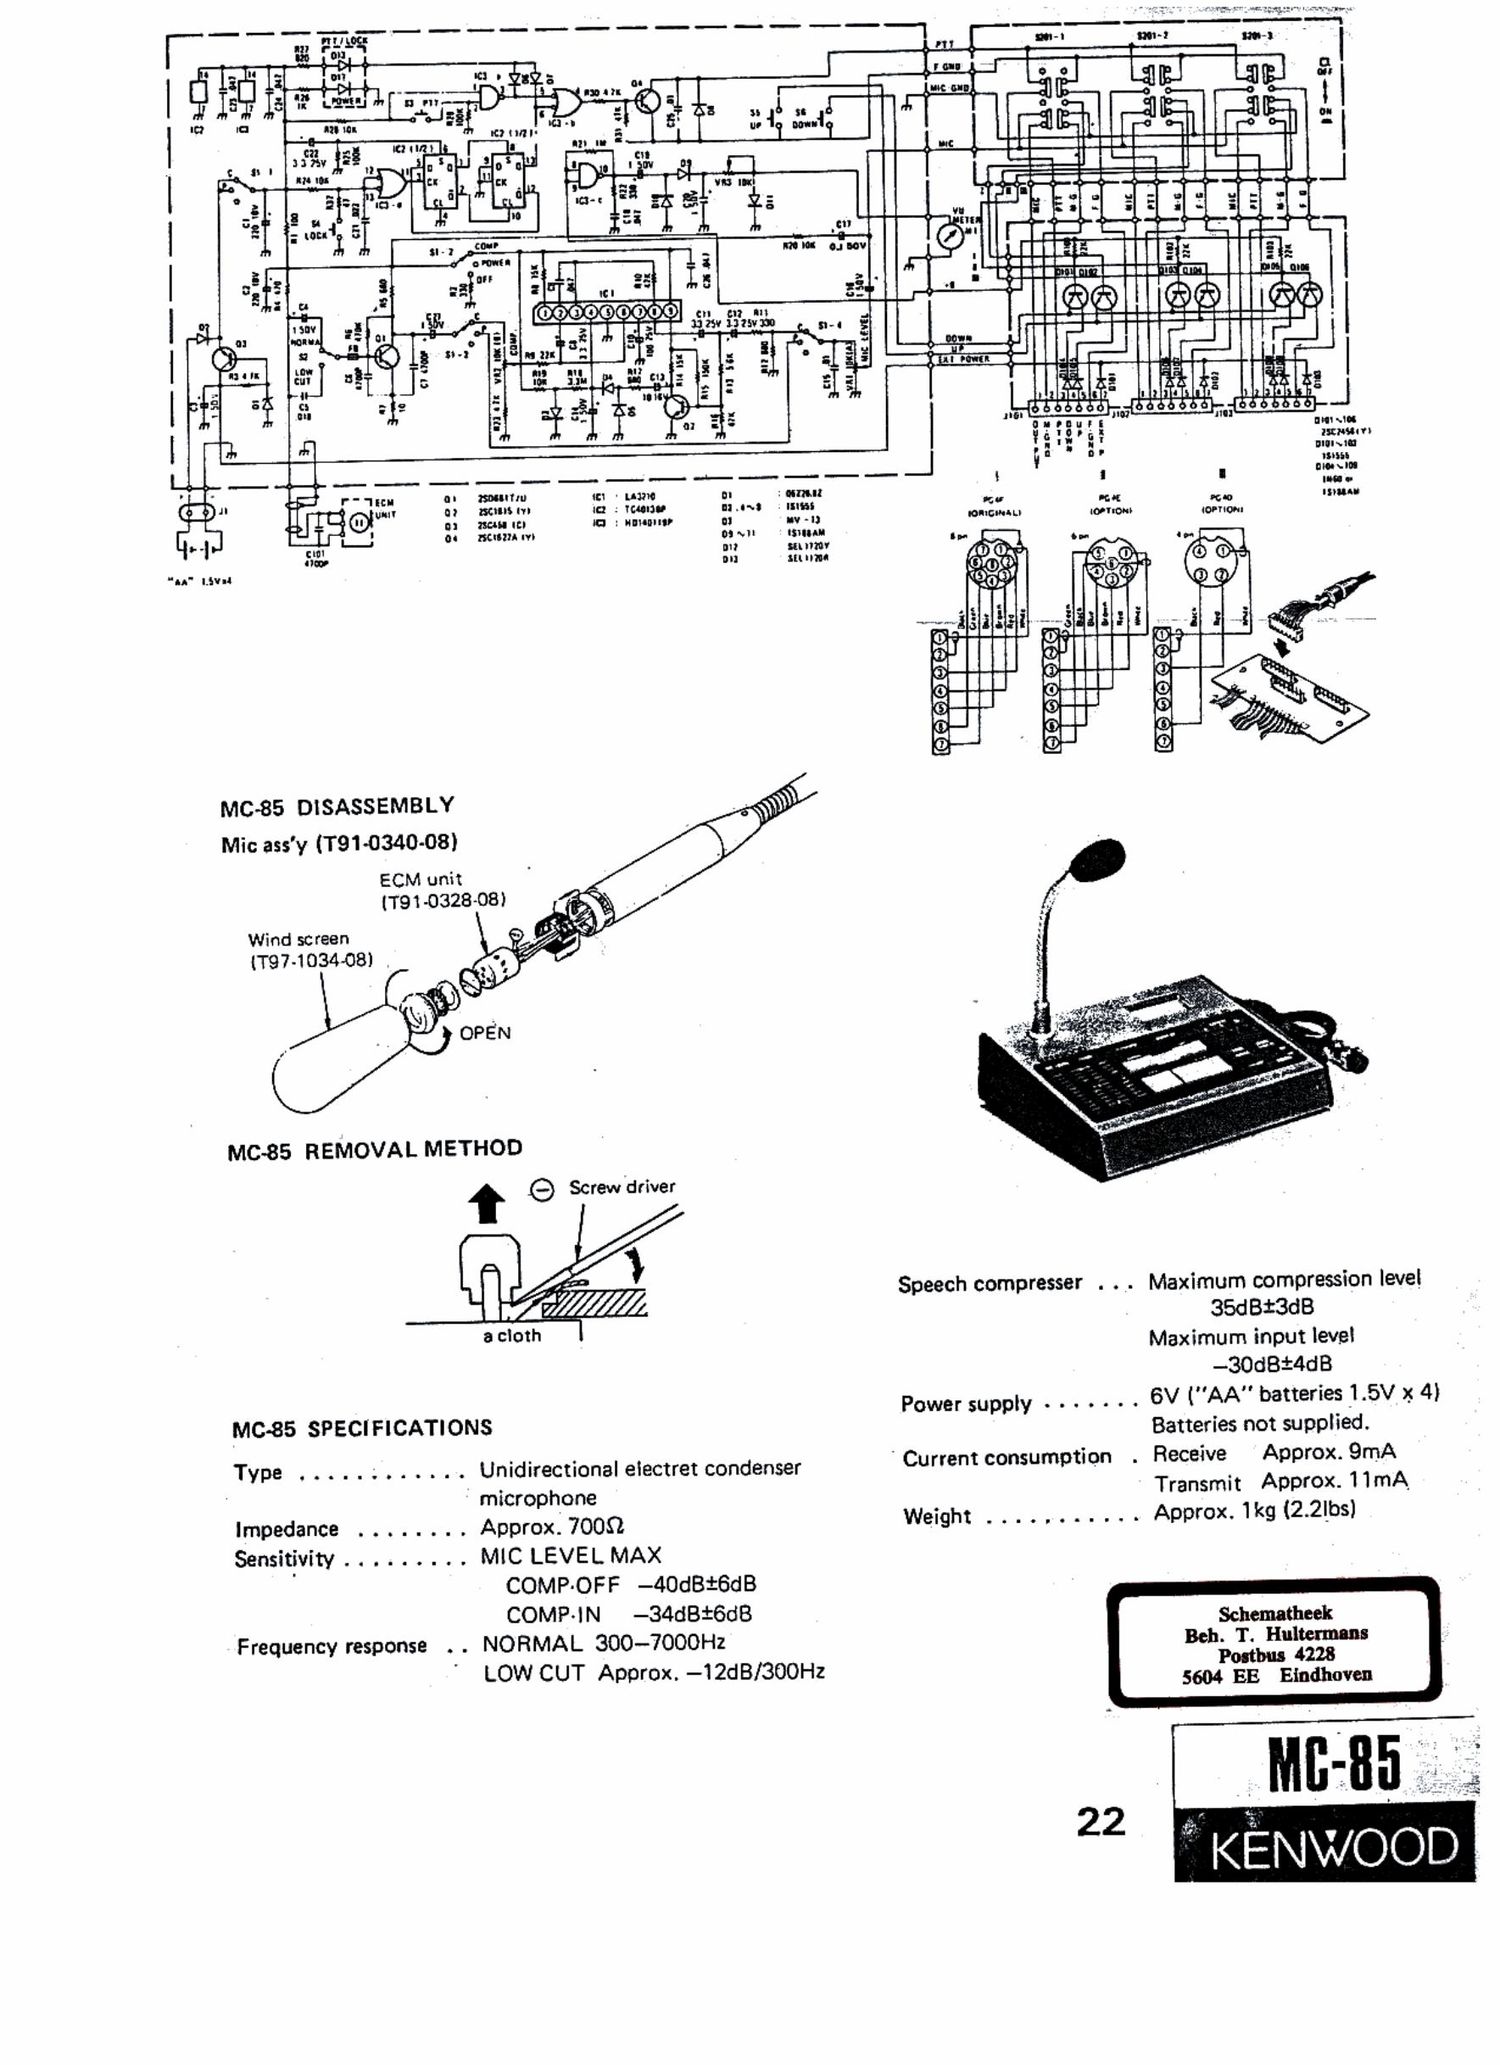 Kenwood MC 85 Service Manual